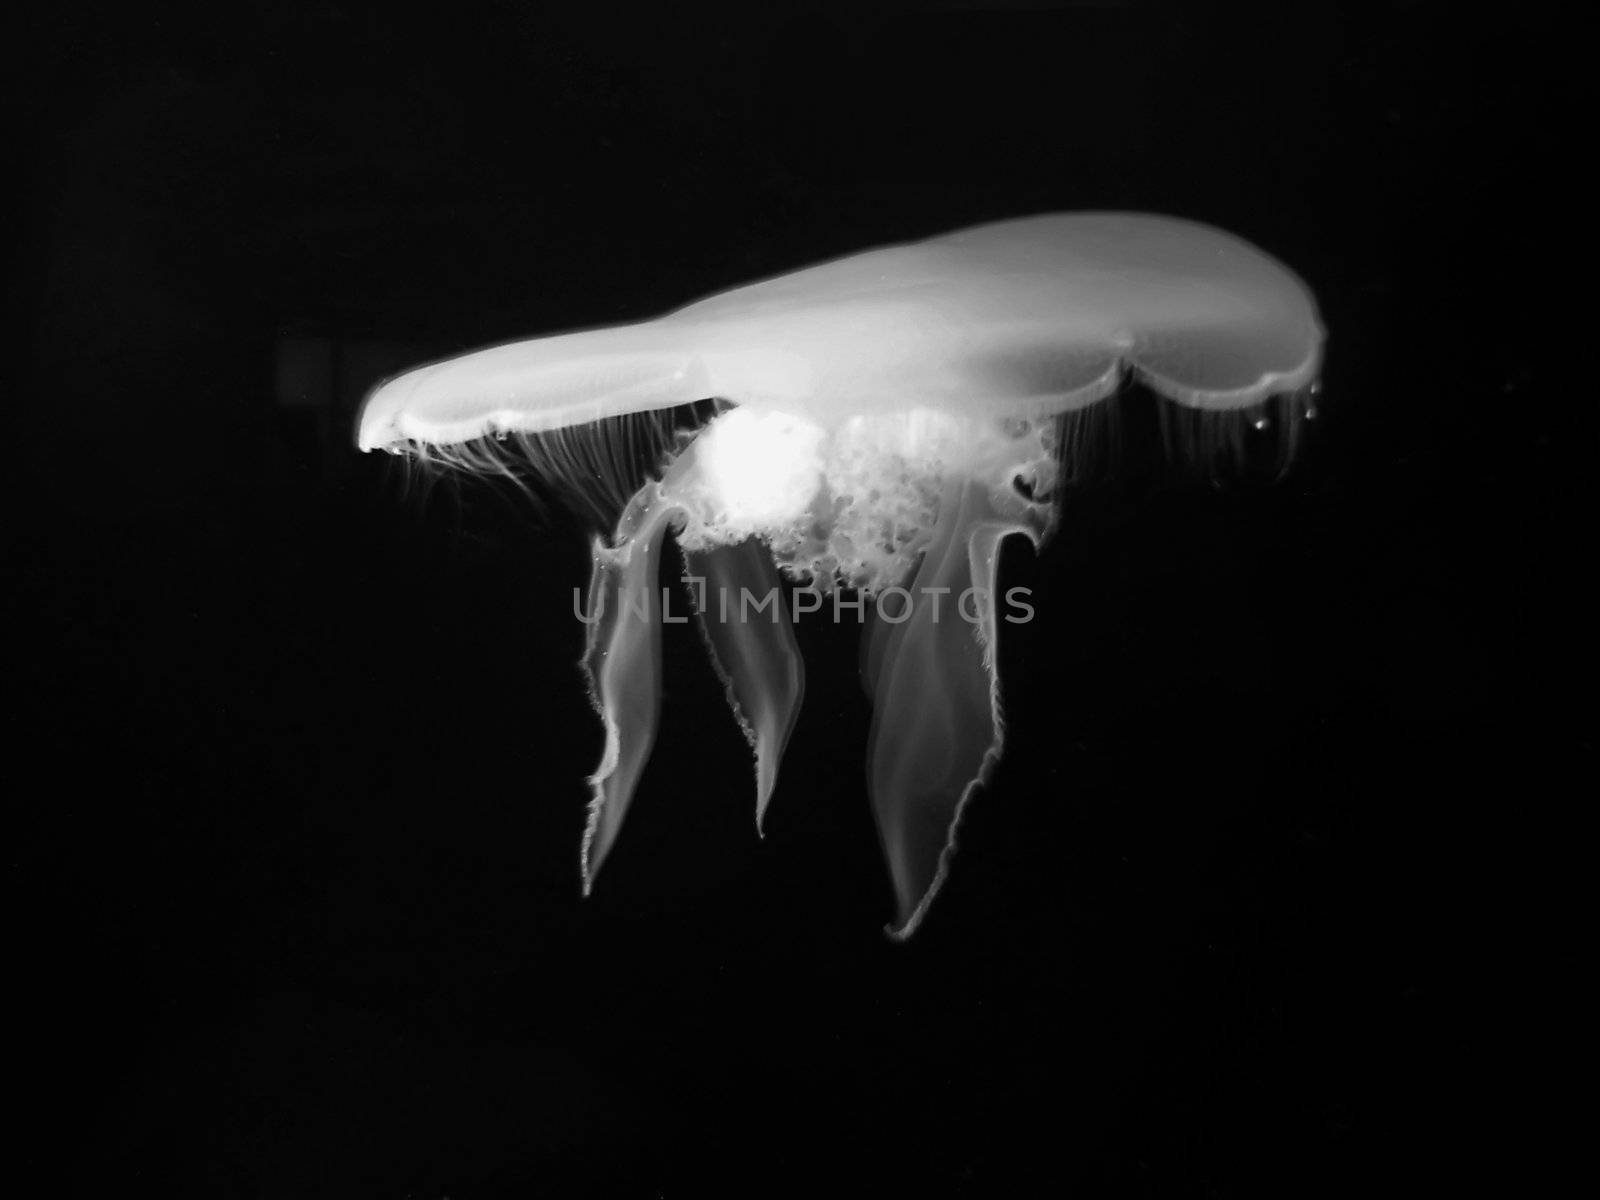 Bioluminescent jellyfish in dark and deep ocean waters